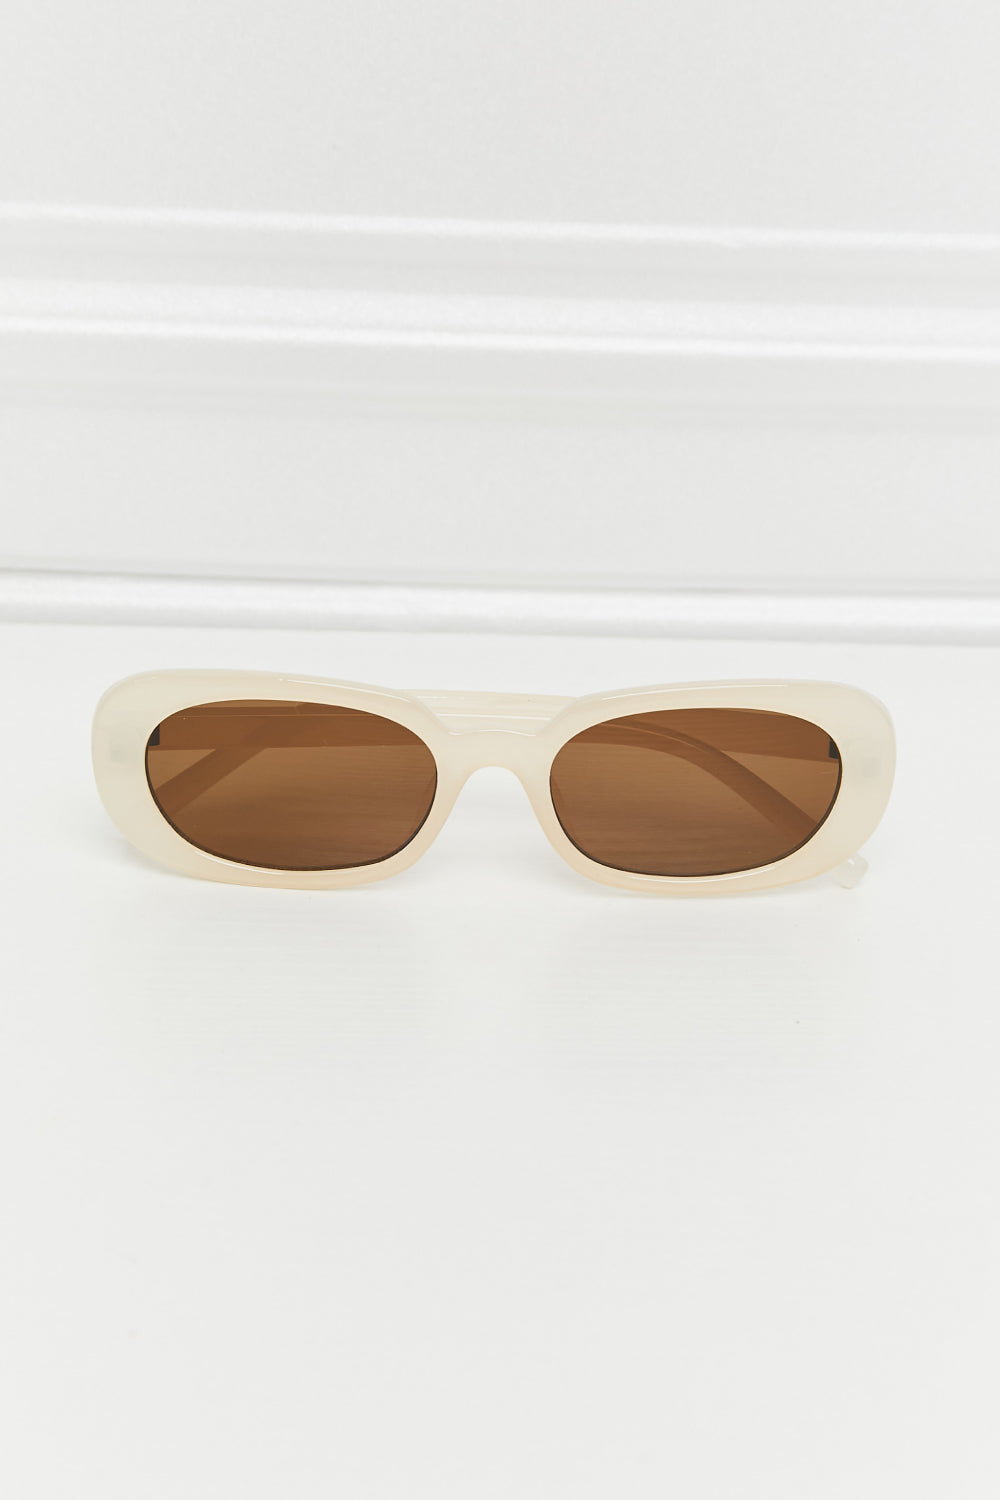 Oval Full Rim Sunglasses Cream One Size Sunglasses by Vim&Vigor | Vim&Vigor Boutique